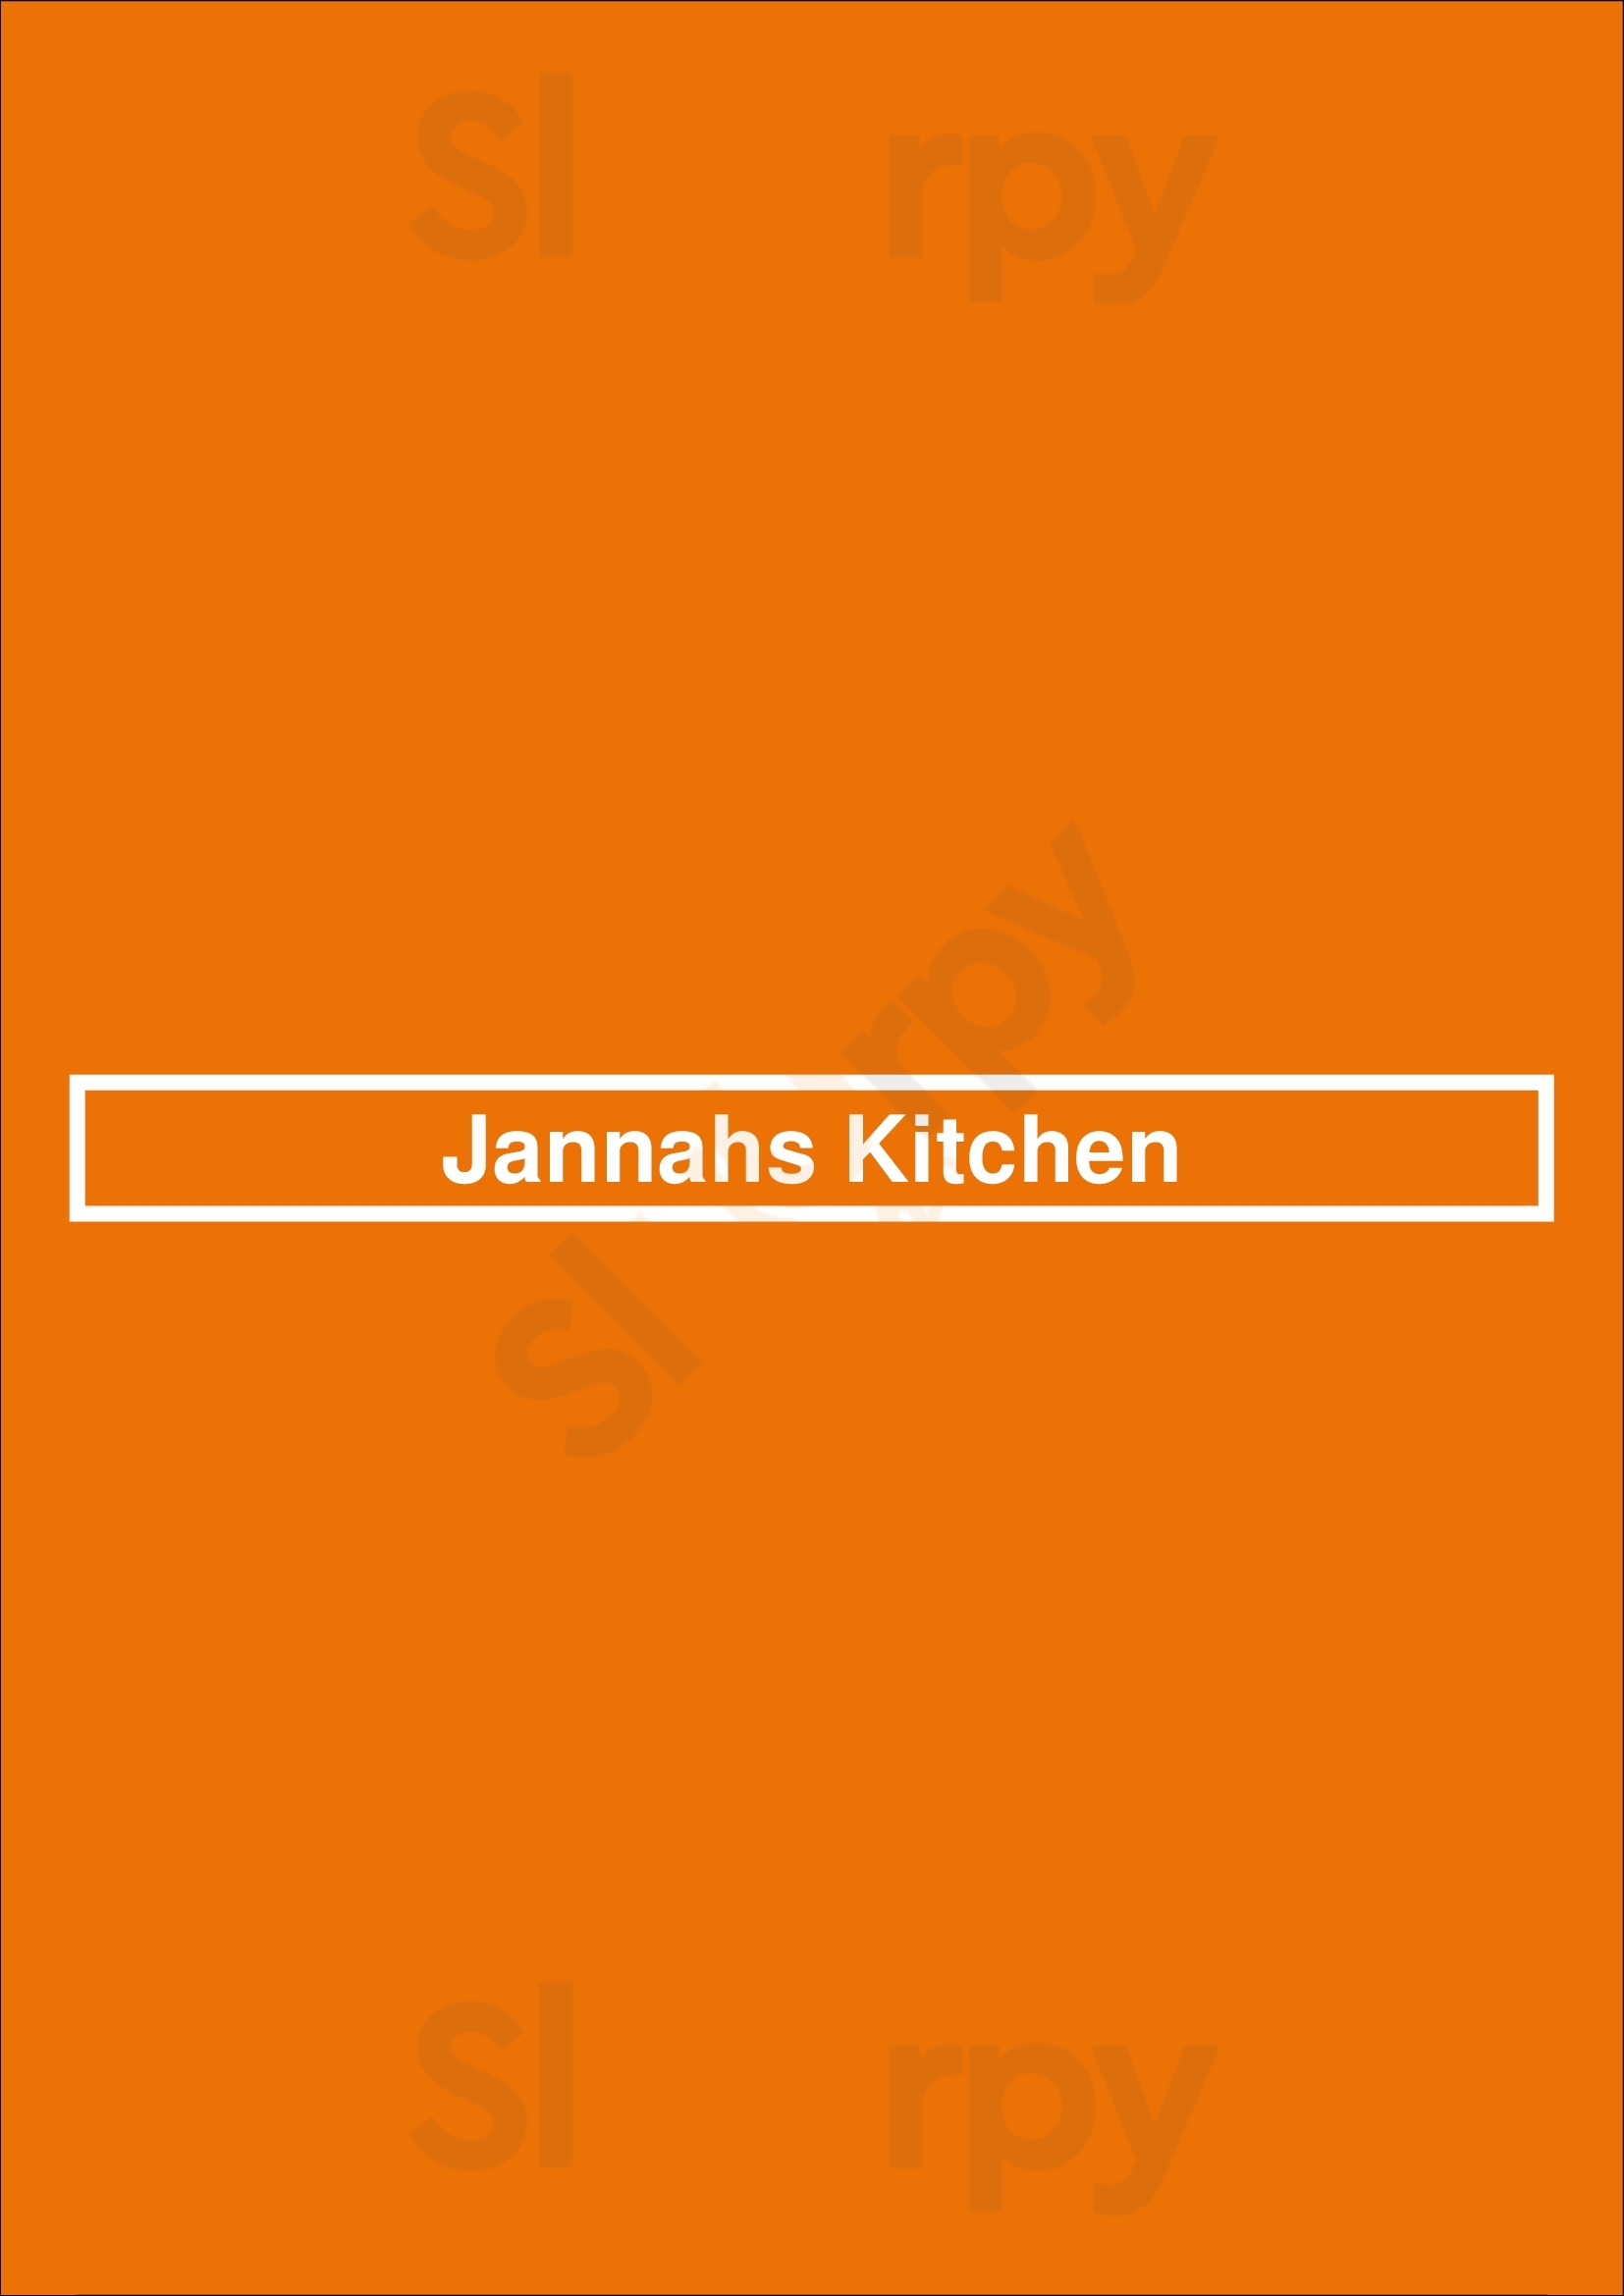 Jannahs Kitchen Manchester Menu - 1